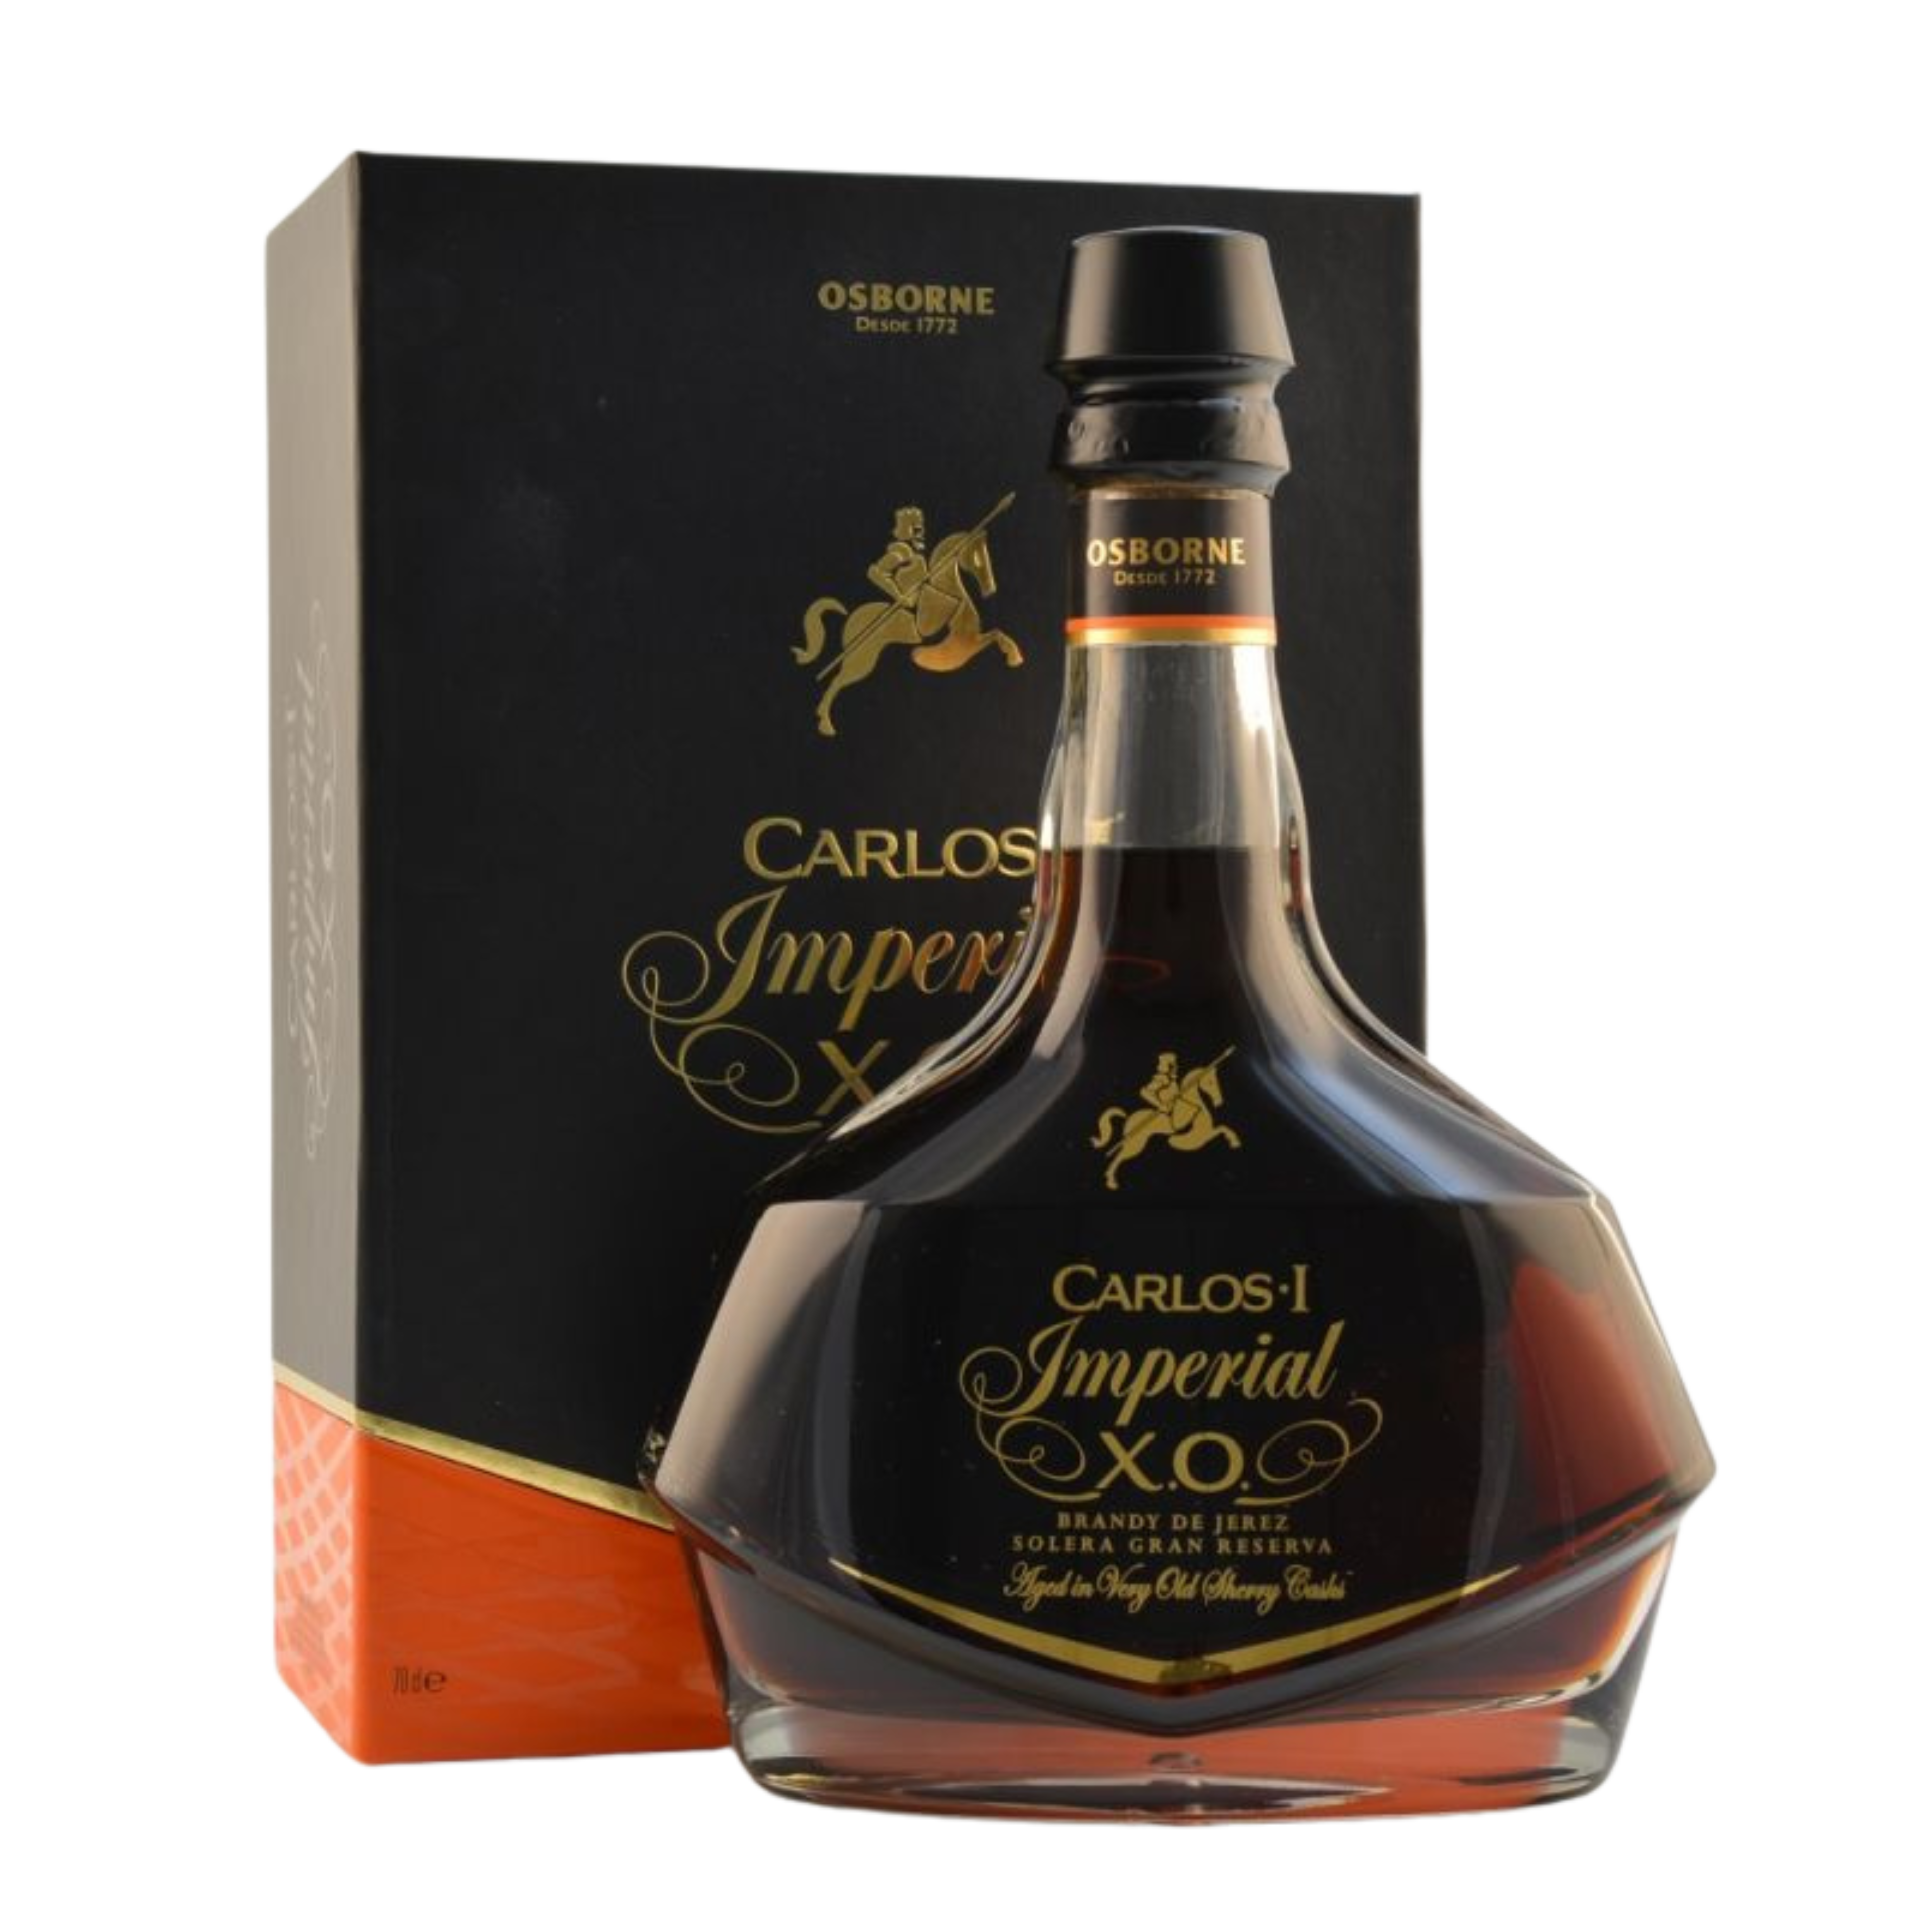 Carlos I Imperial XO Solera Gran Reserva Brandy 40% 0,7l